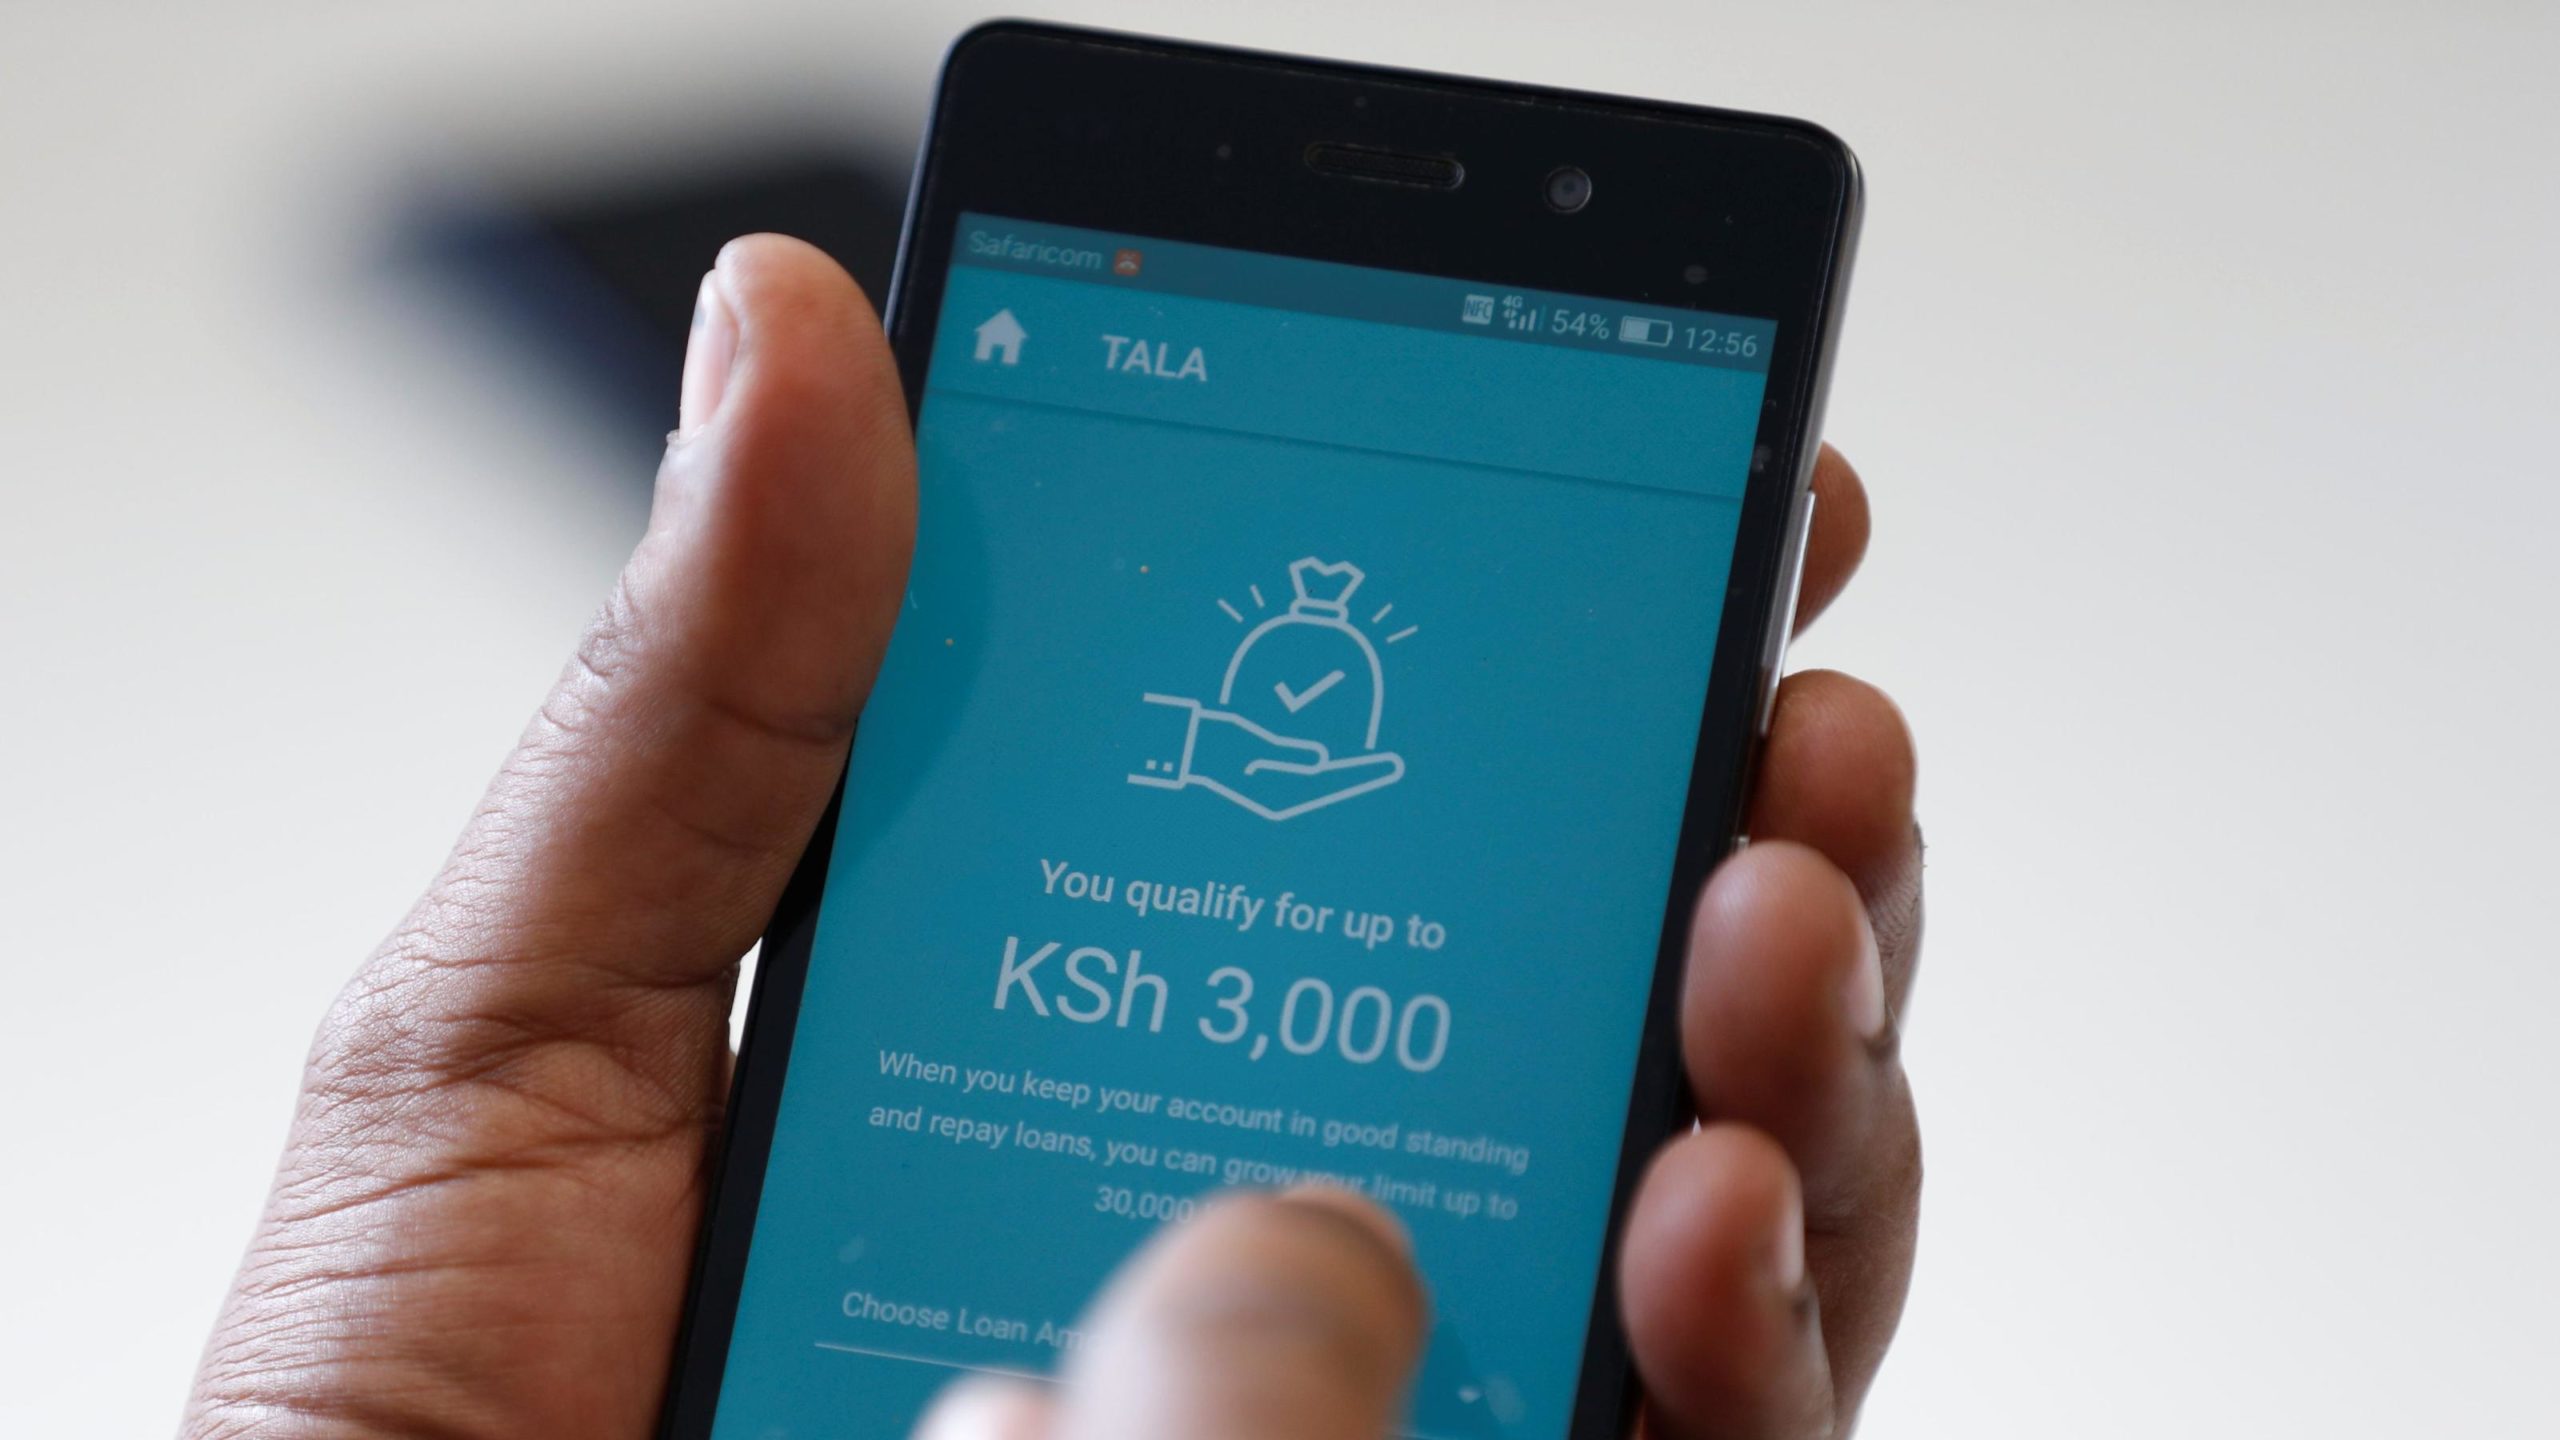 Kenya is doubling down on regulating mobile loan apps to combat predatory lending